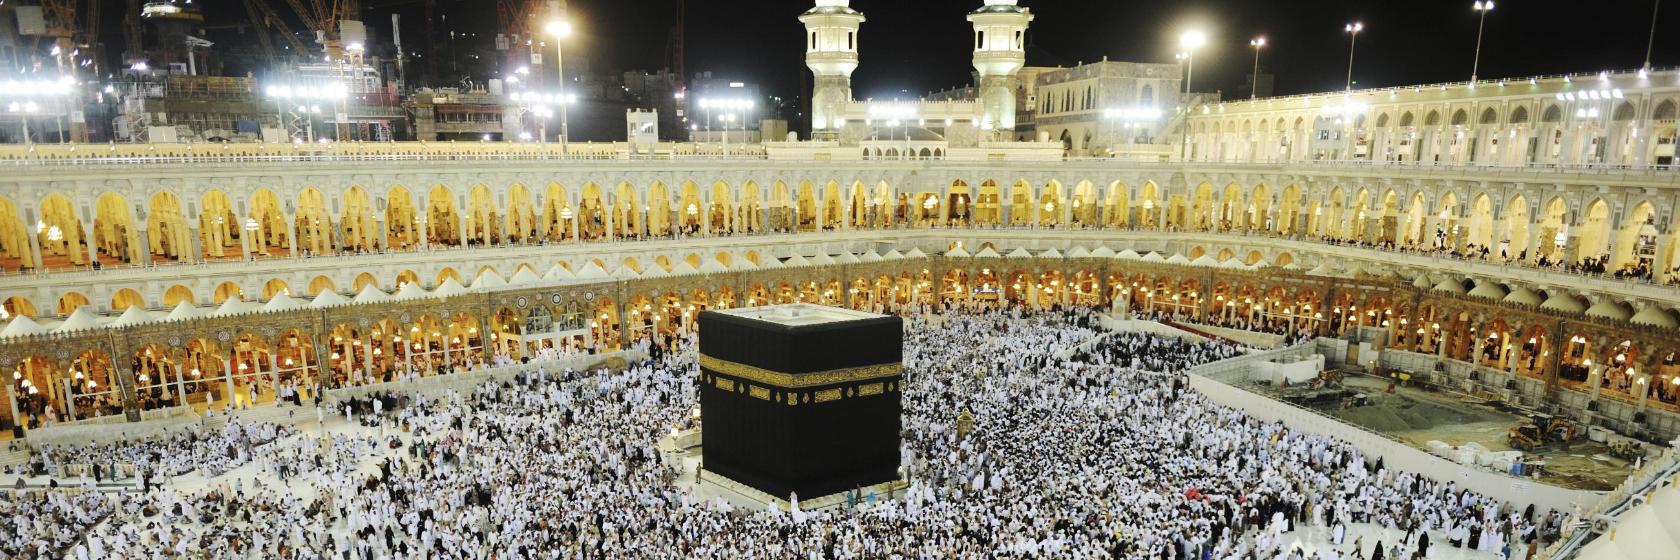 The 10 best hotels near Masjid Al Haram in Mecca, Saudi Arabia